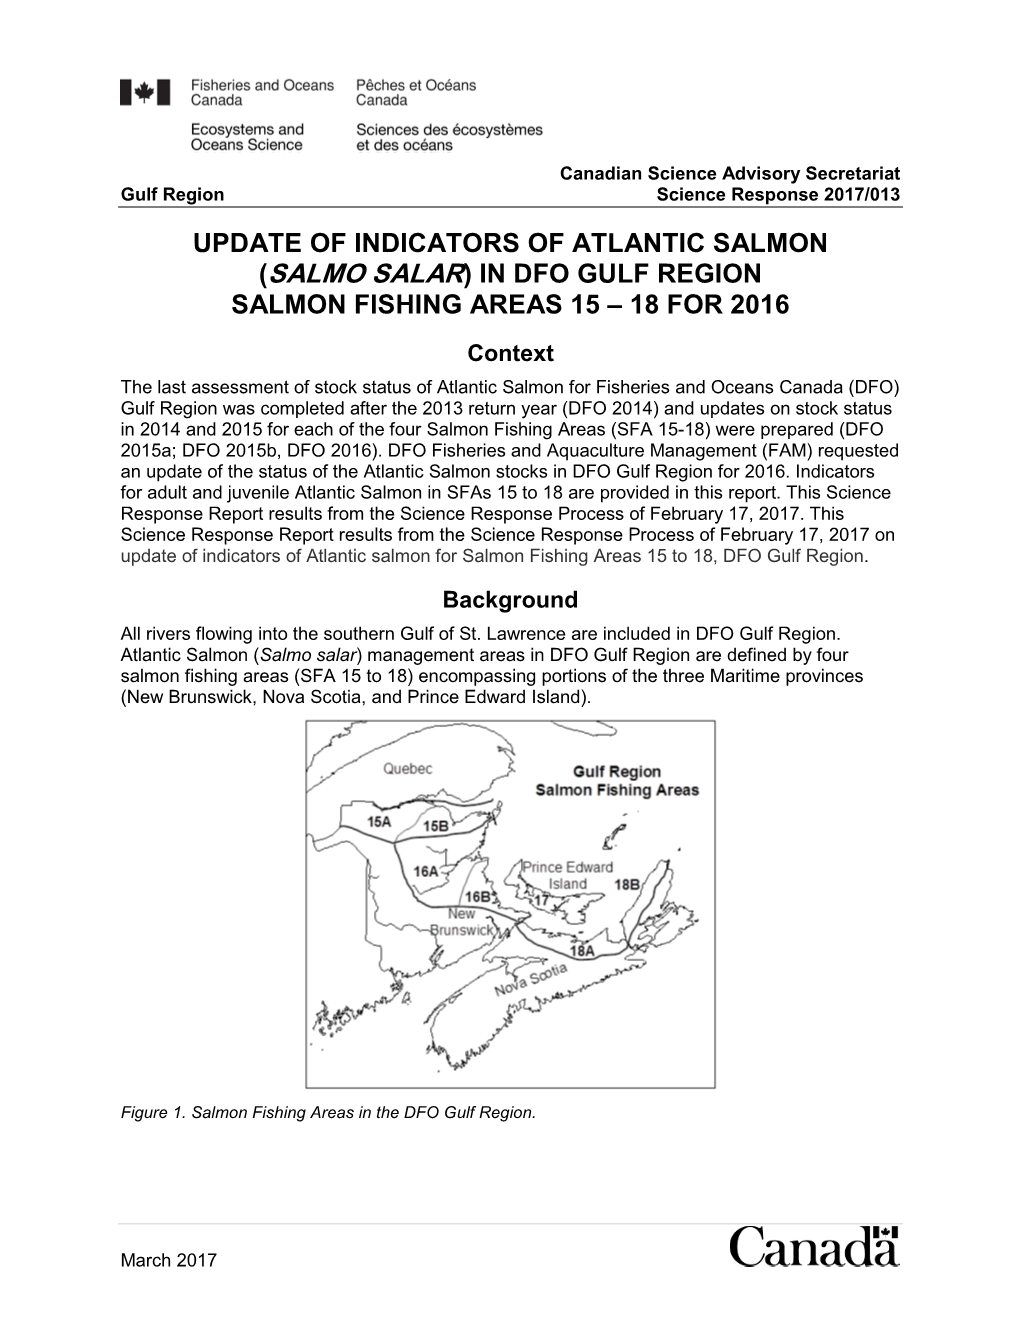 Update of Indicators of Atlantic Salmon